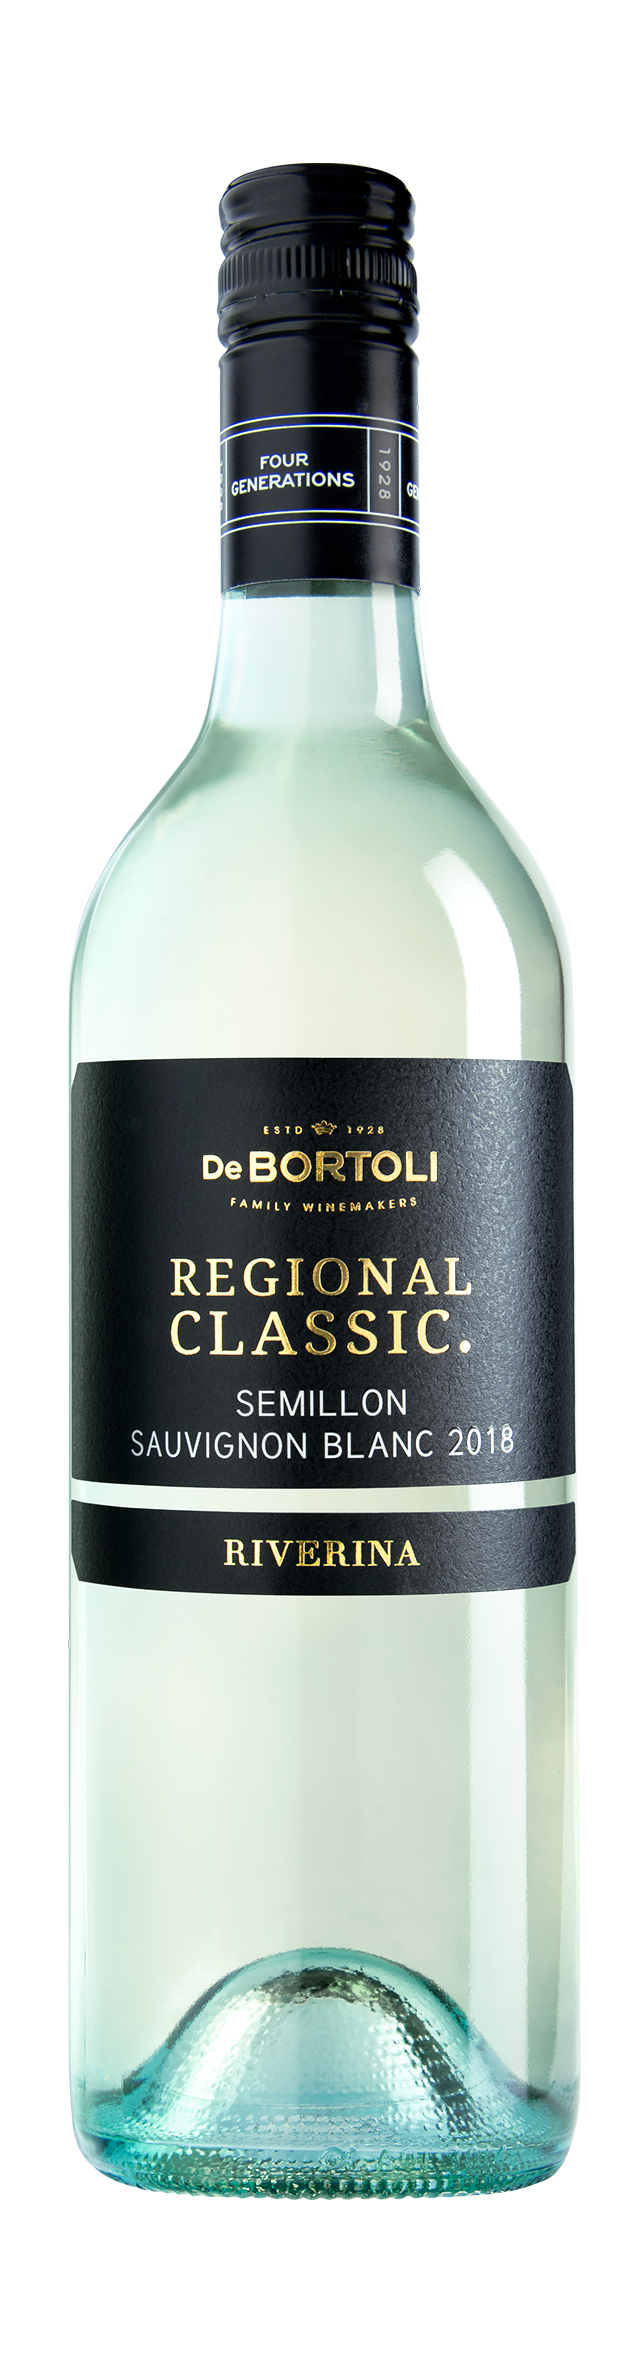 Regional Classic Semillion Sauvignon Blanc